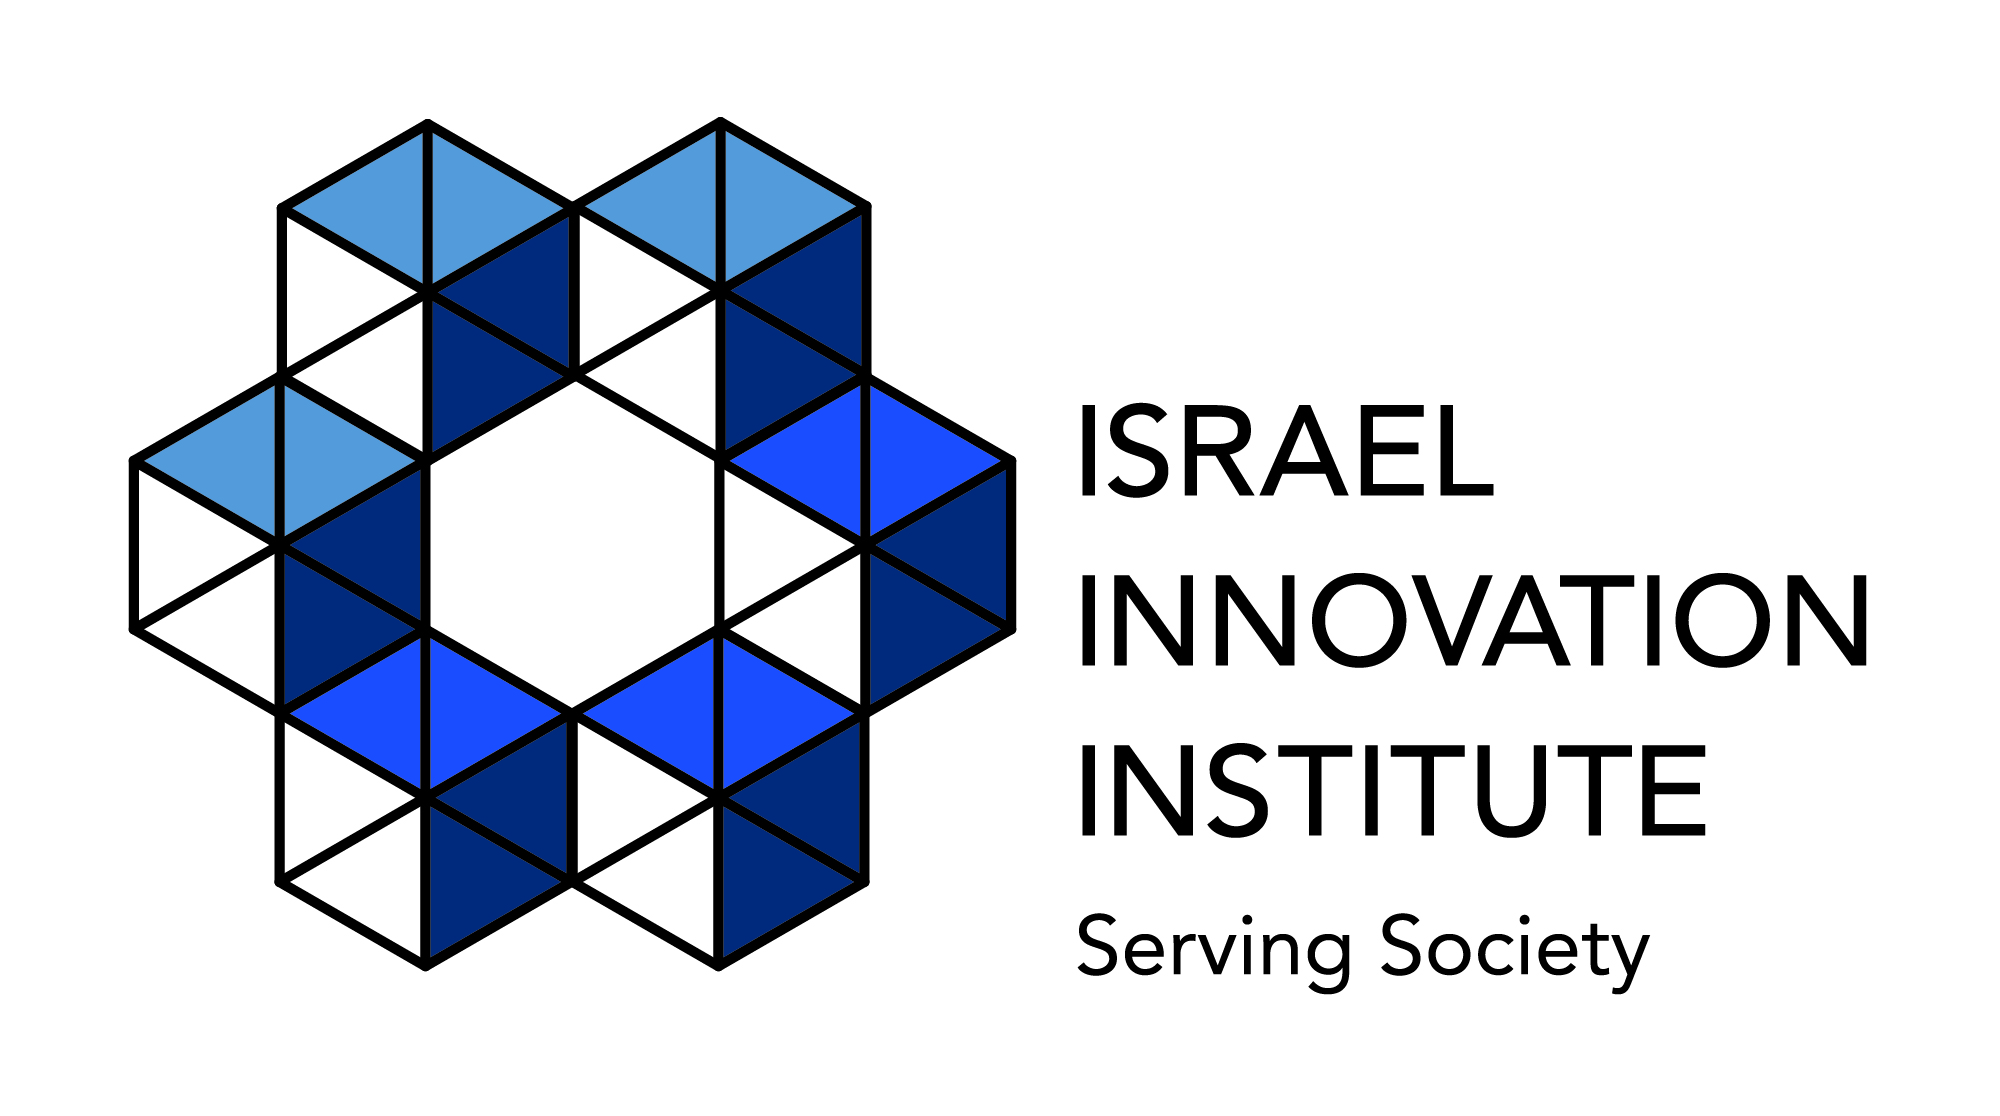 ISRAEL INNOVATION INSTITUTE